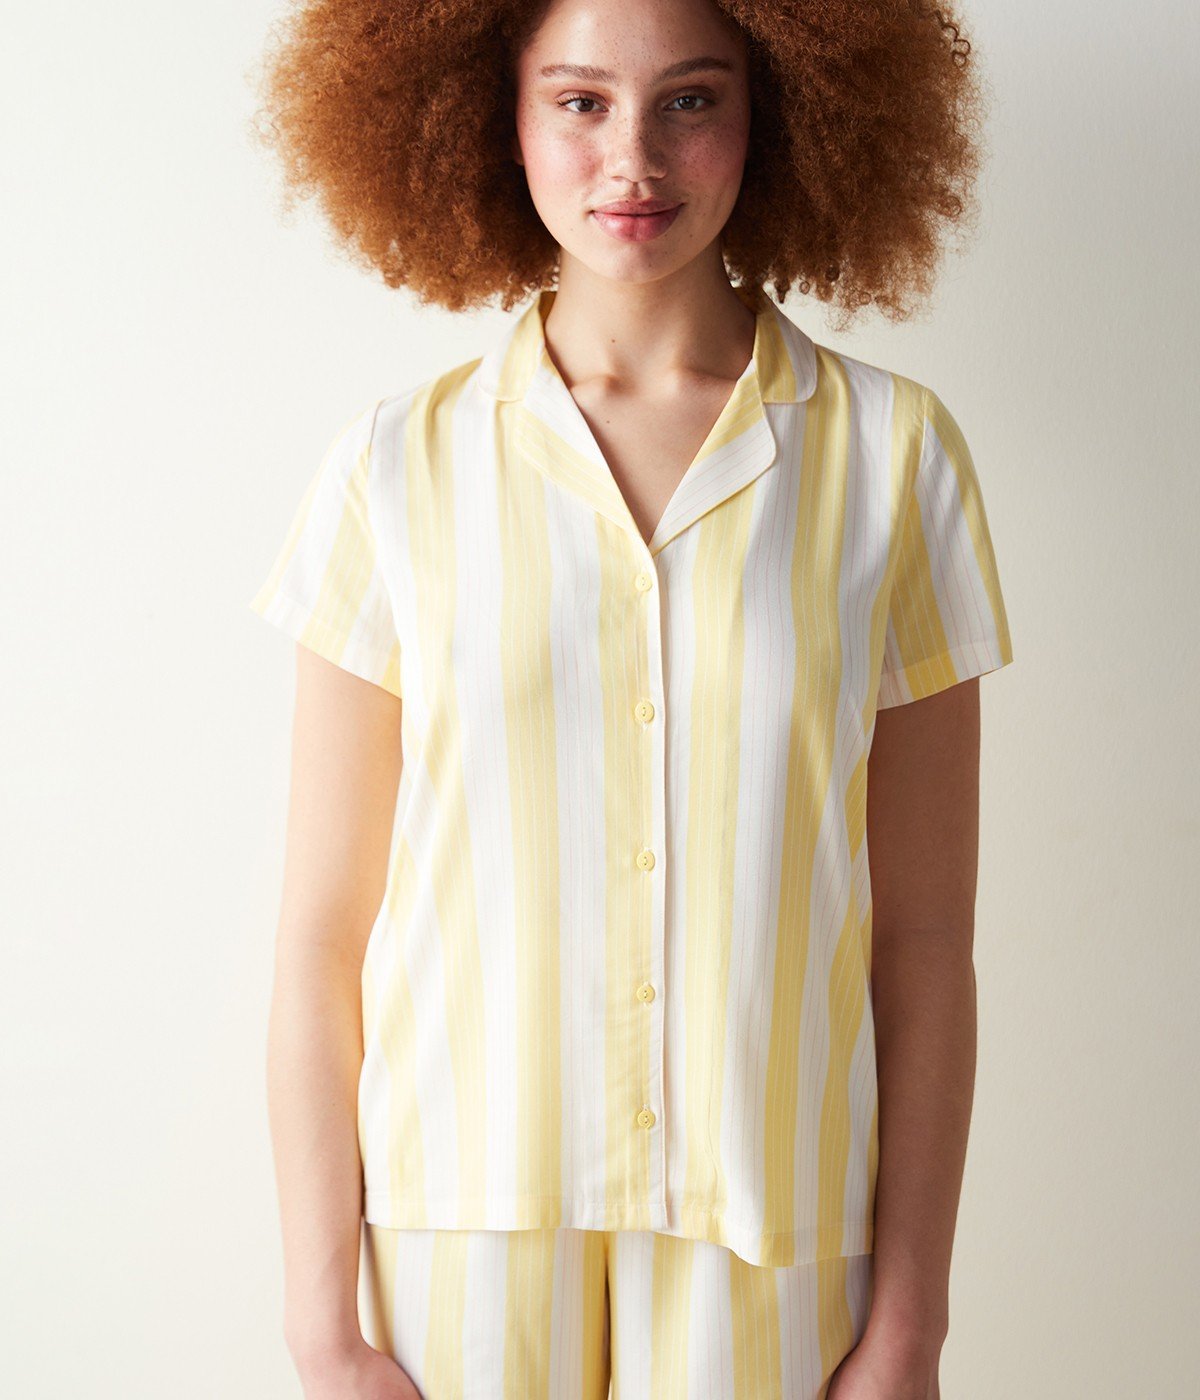 Spring Yellow Striped Long Sleeve Pants Pyjamas Set